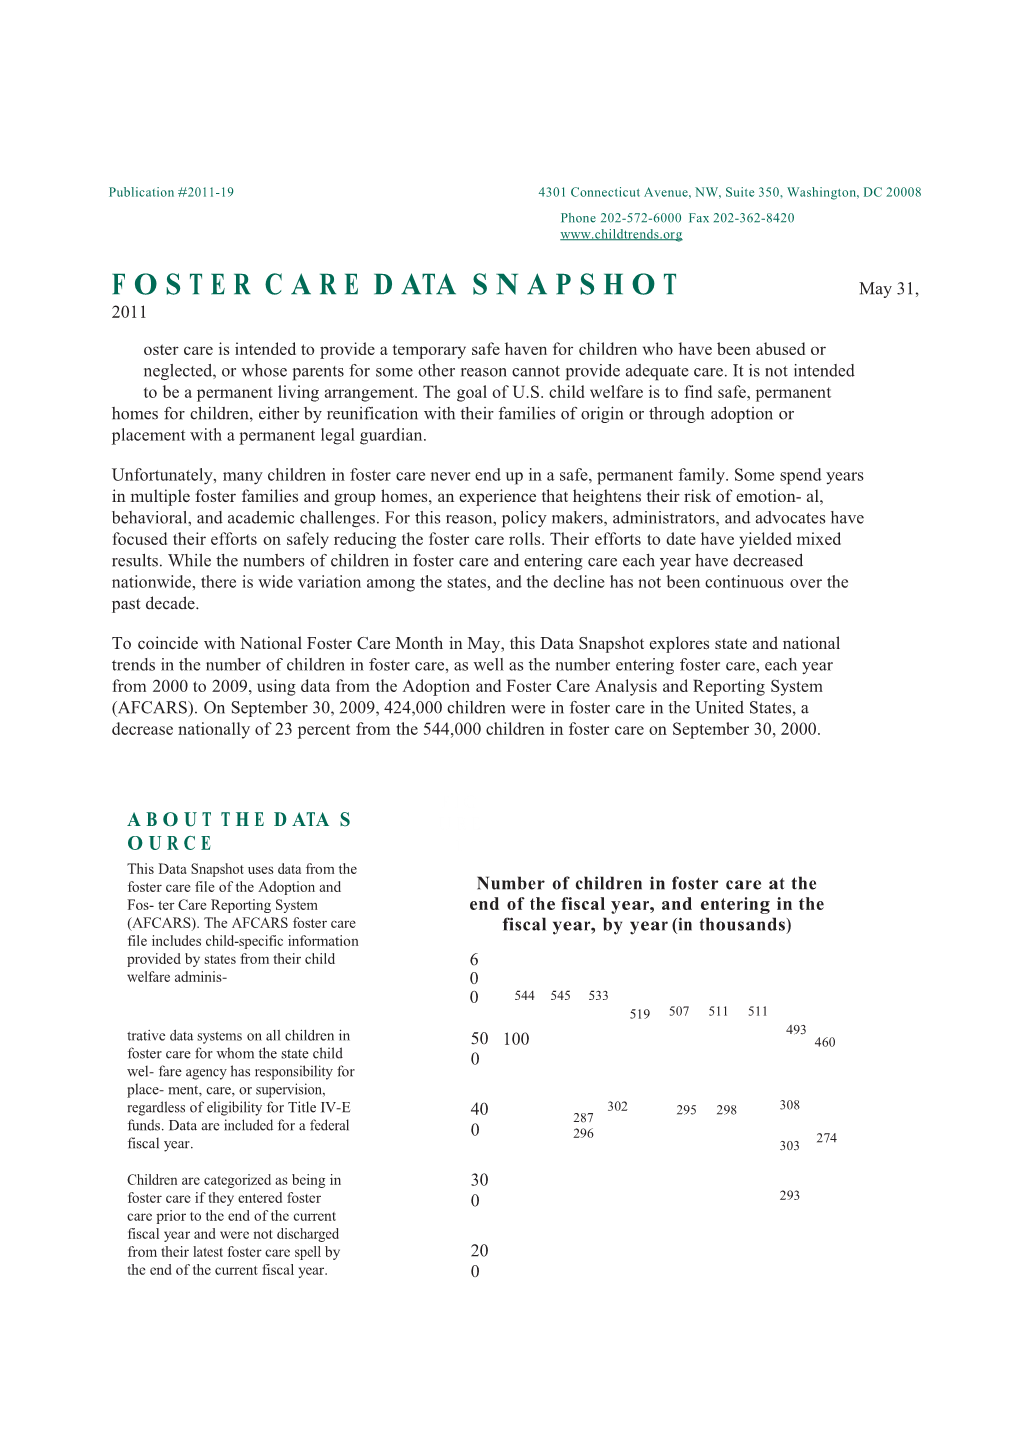 Foster Care Data Snapshot